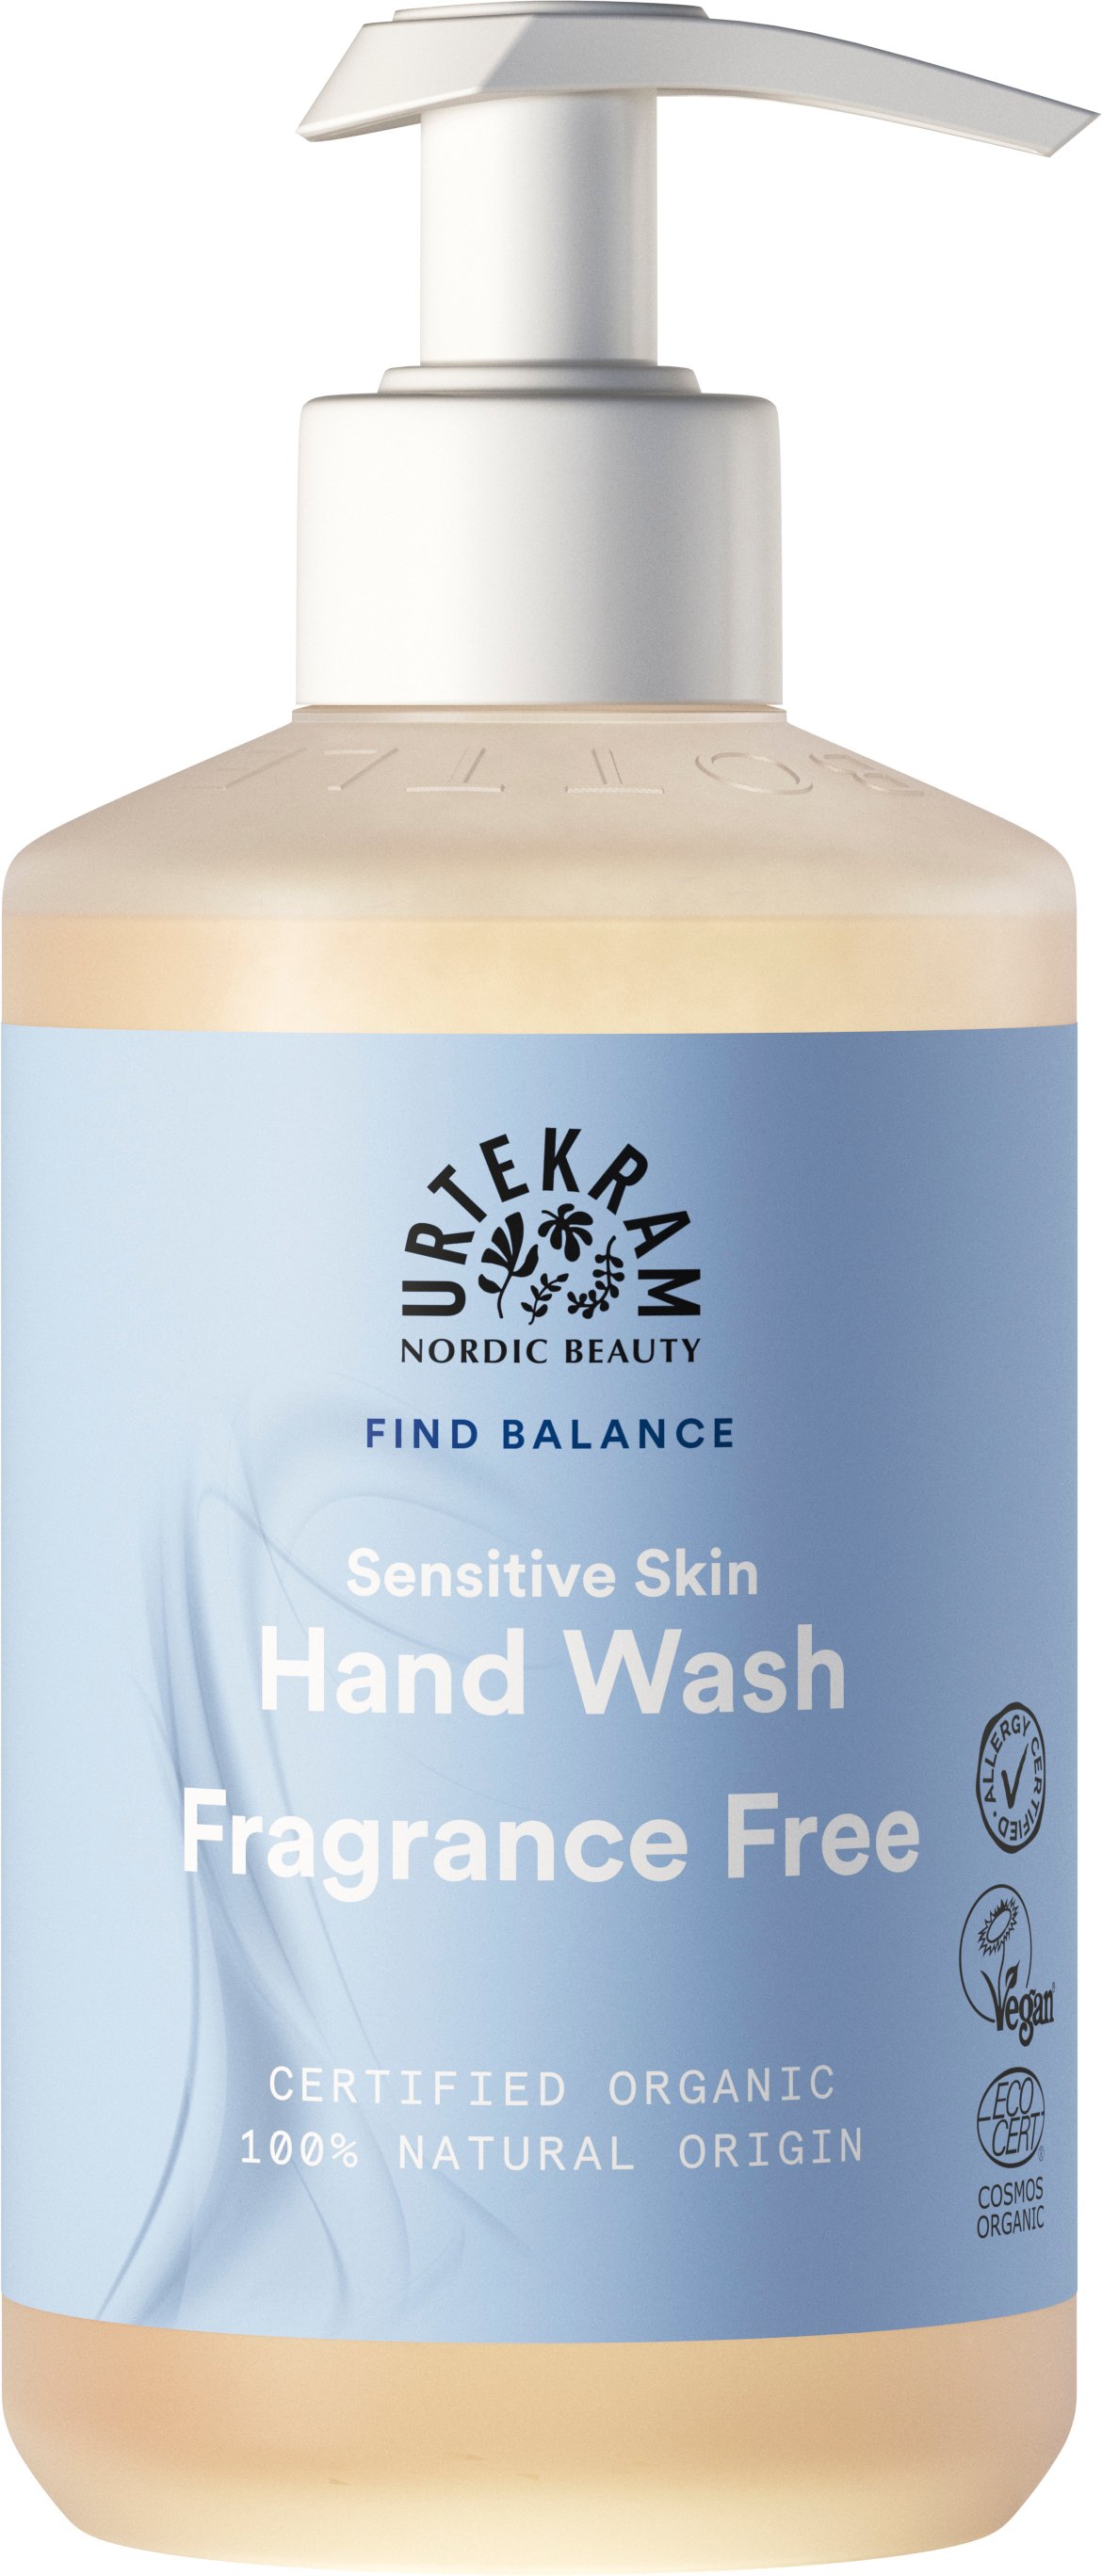 Urtekram Beauty Fragrance Free Hand Wash 300 ml